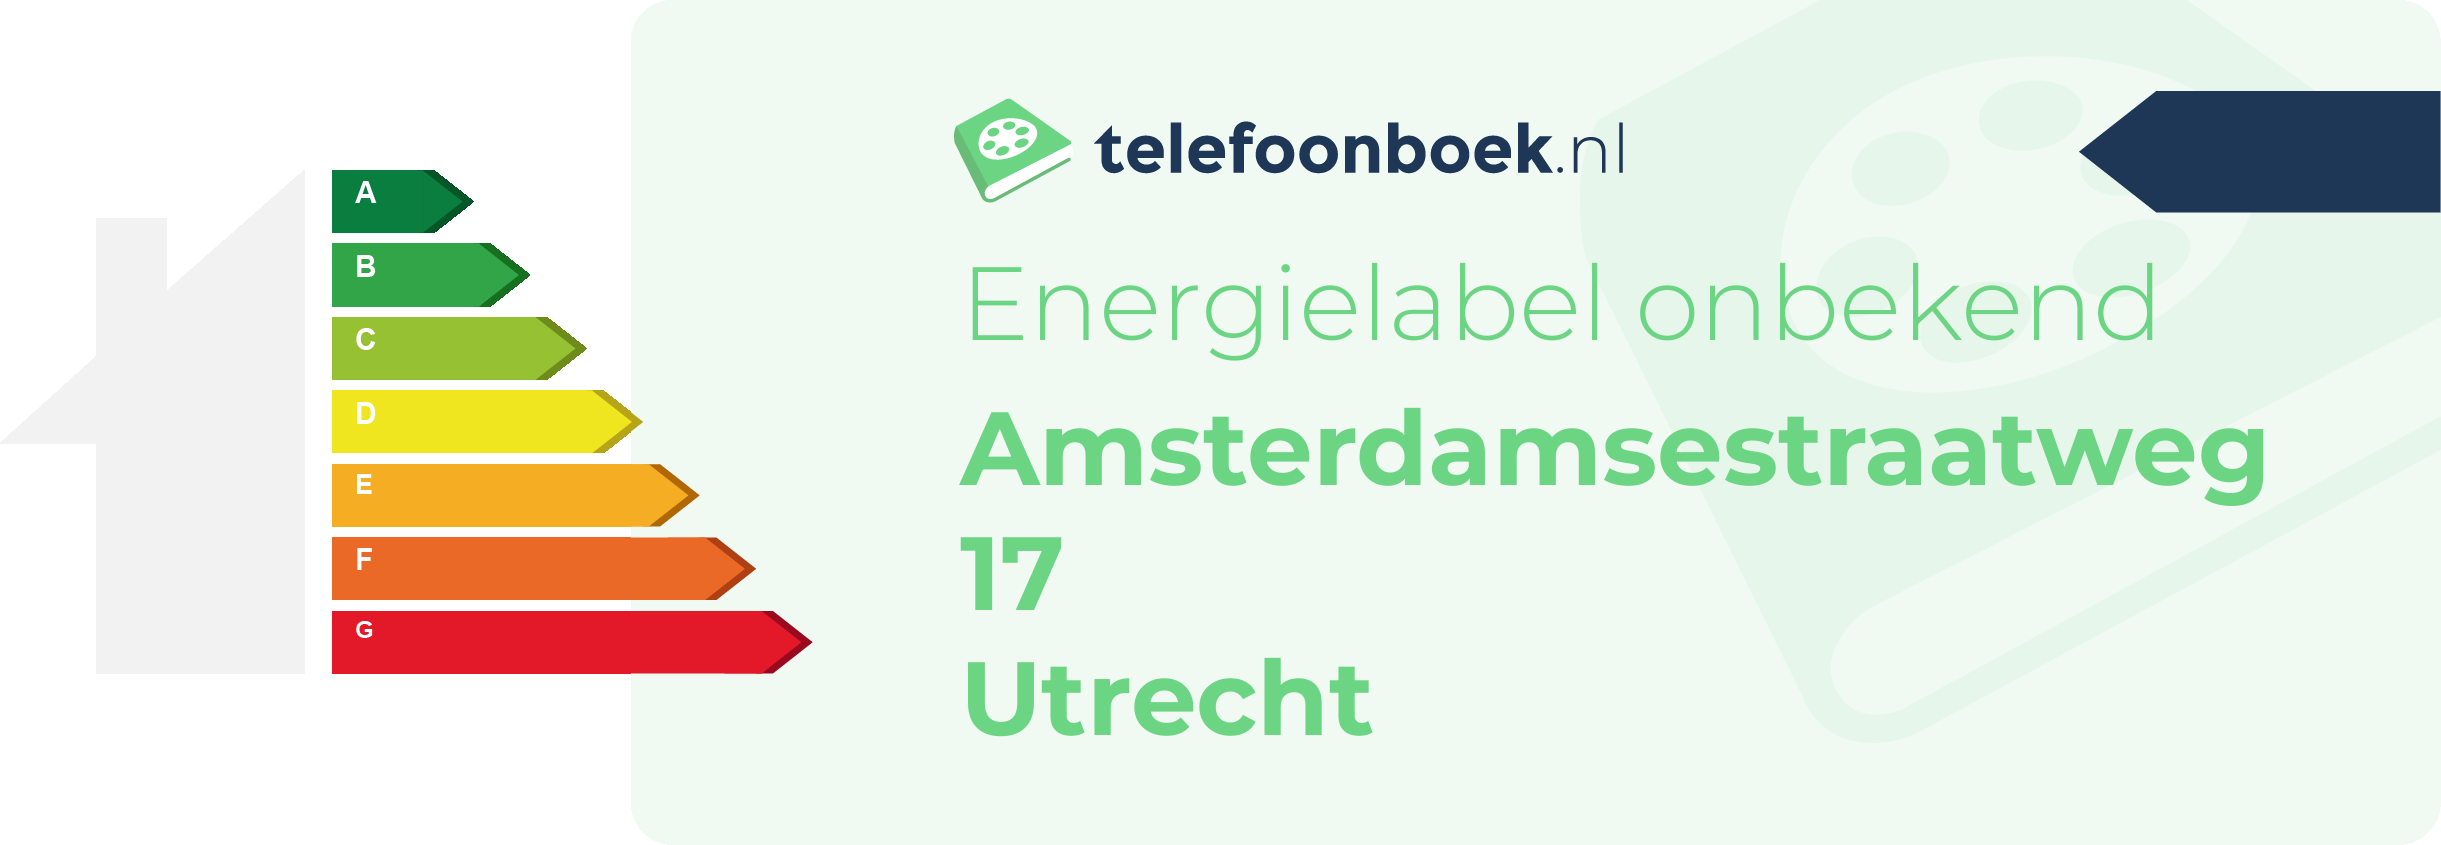 Energielabel Amsterdamsestraatweg 17 Utrecht